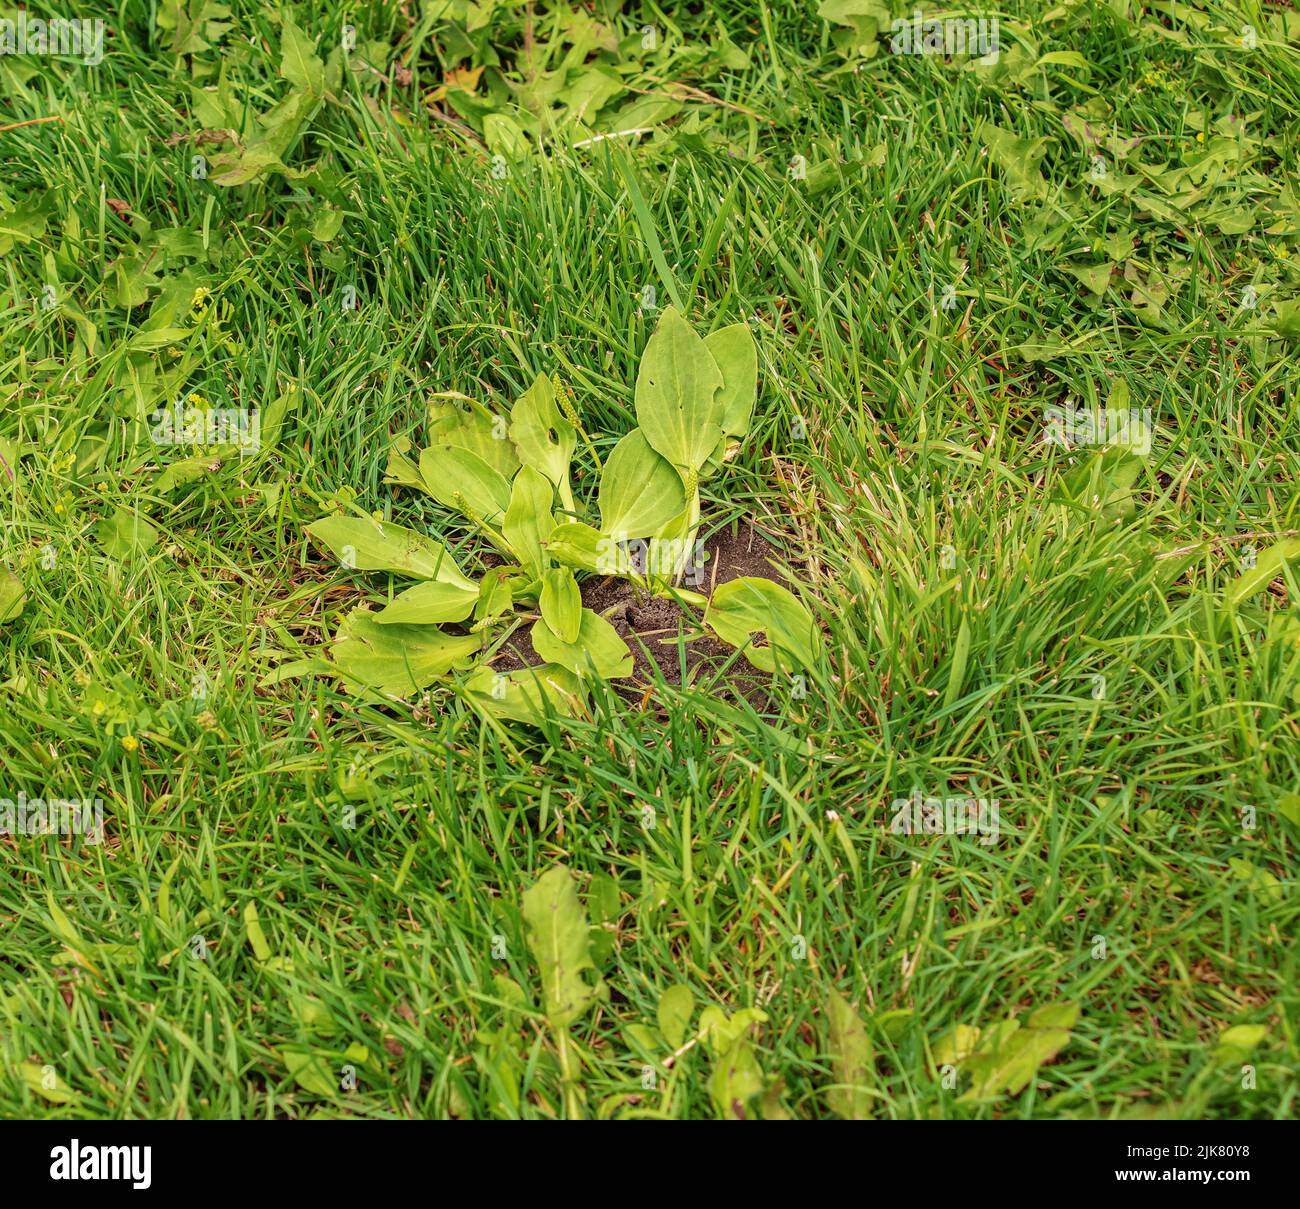 Plantago lanceolata. Family Plantaginaceae. Plantain flowering plant with green leaf. Stock Photo